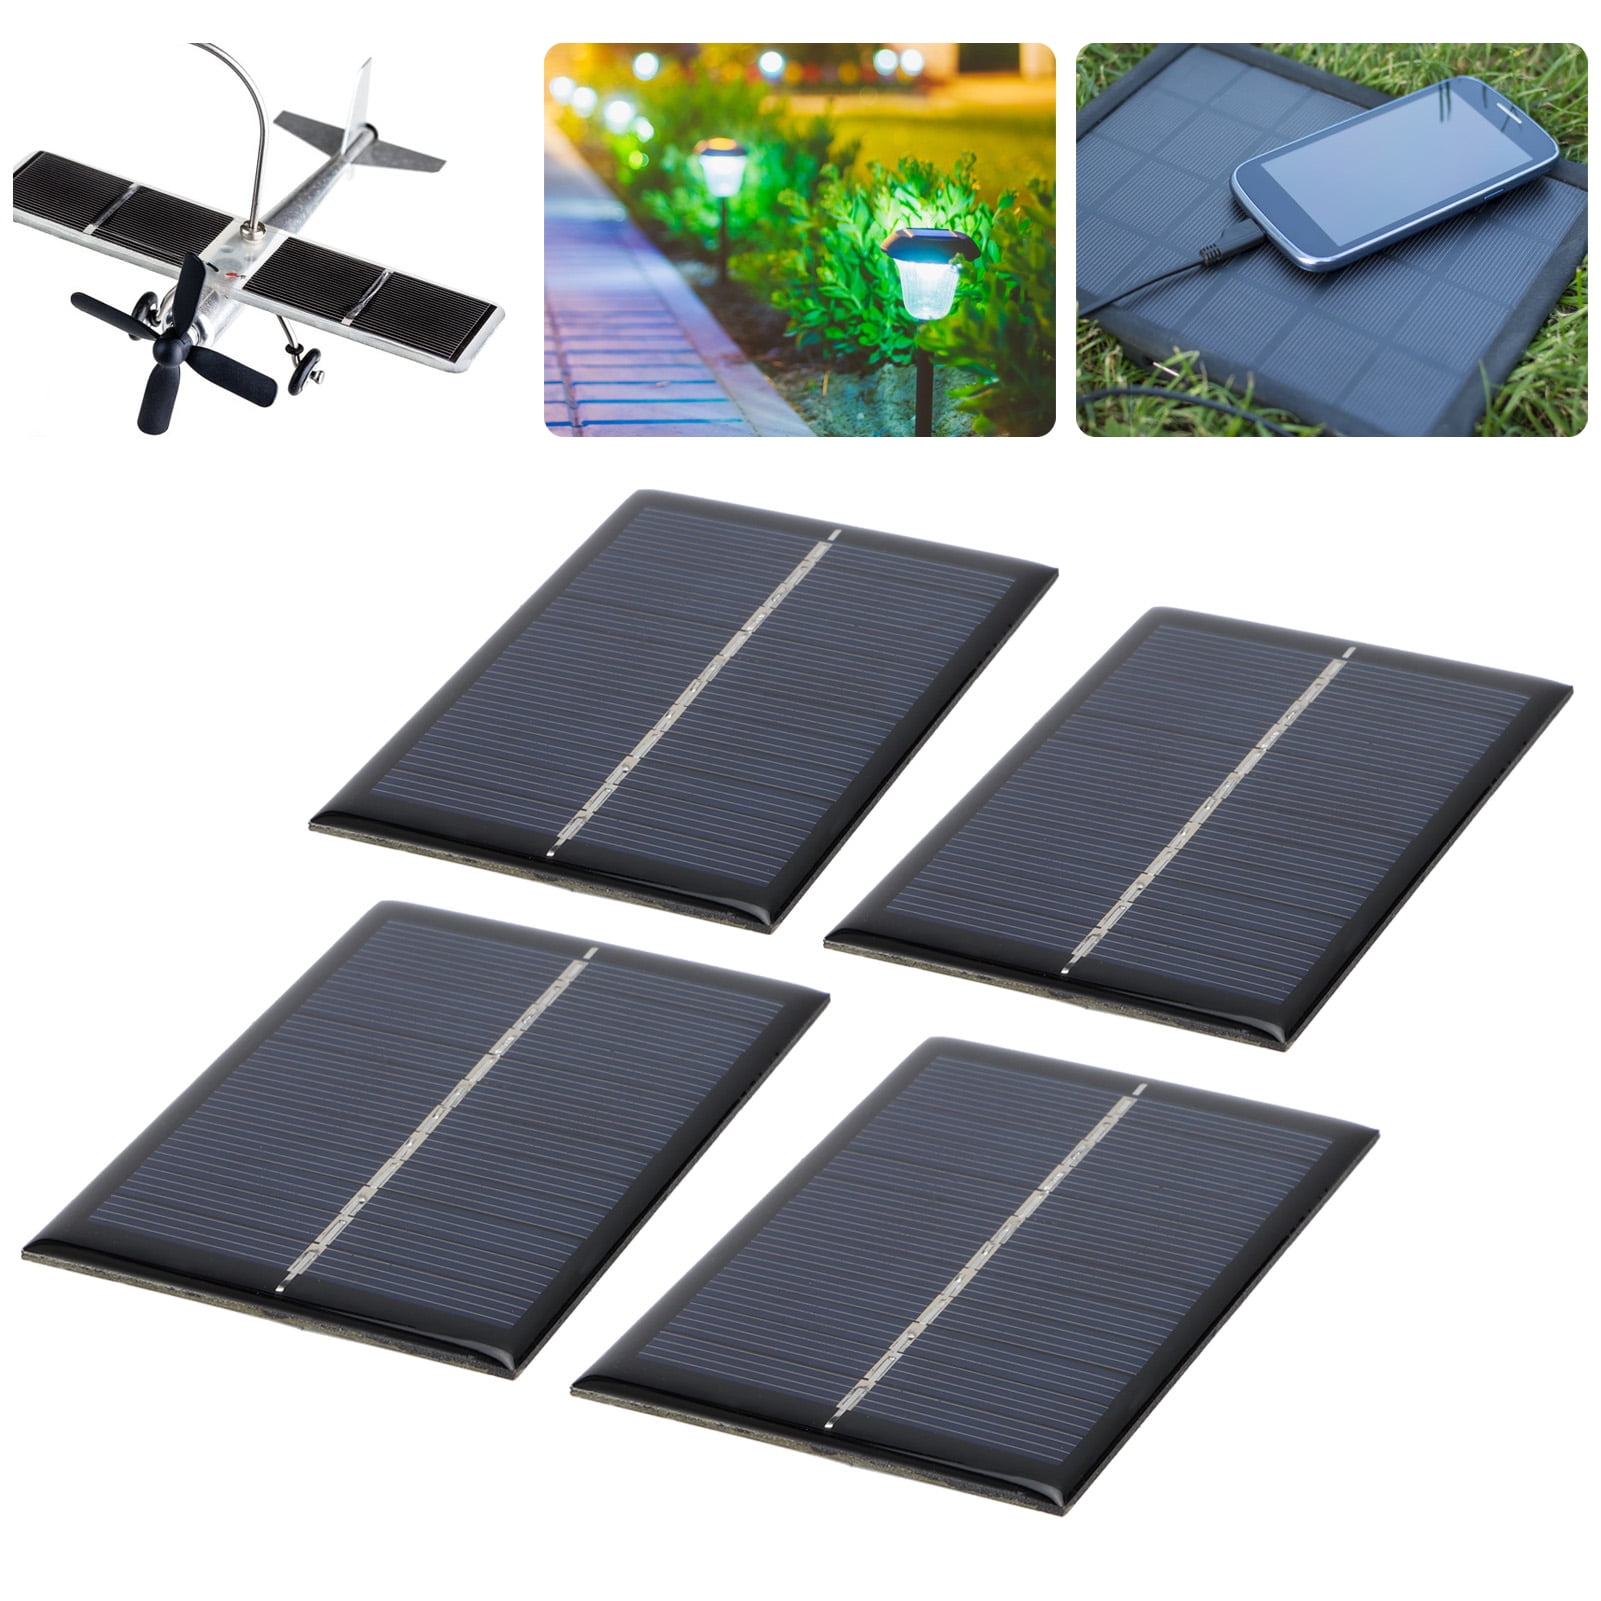 6V 6W Flexible Solar Panel Module Board Outdoor Light Lamp Power Battery Charger 